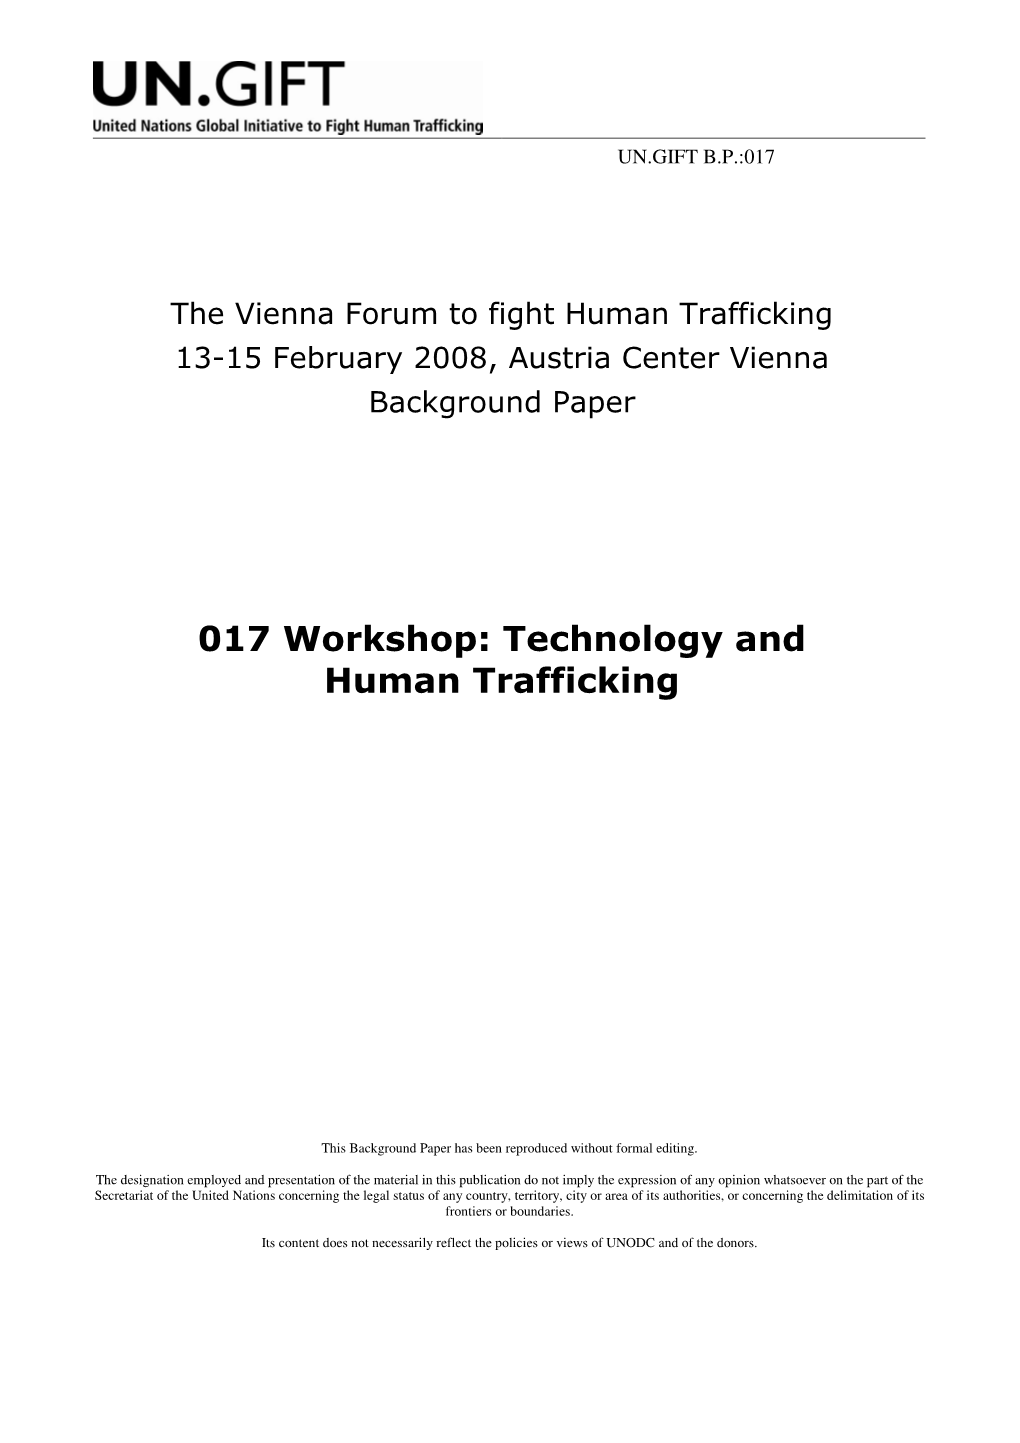 Technology and Human Trafficking